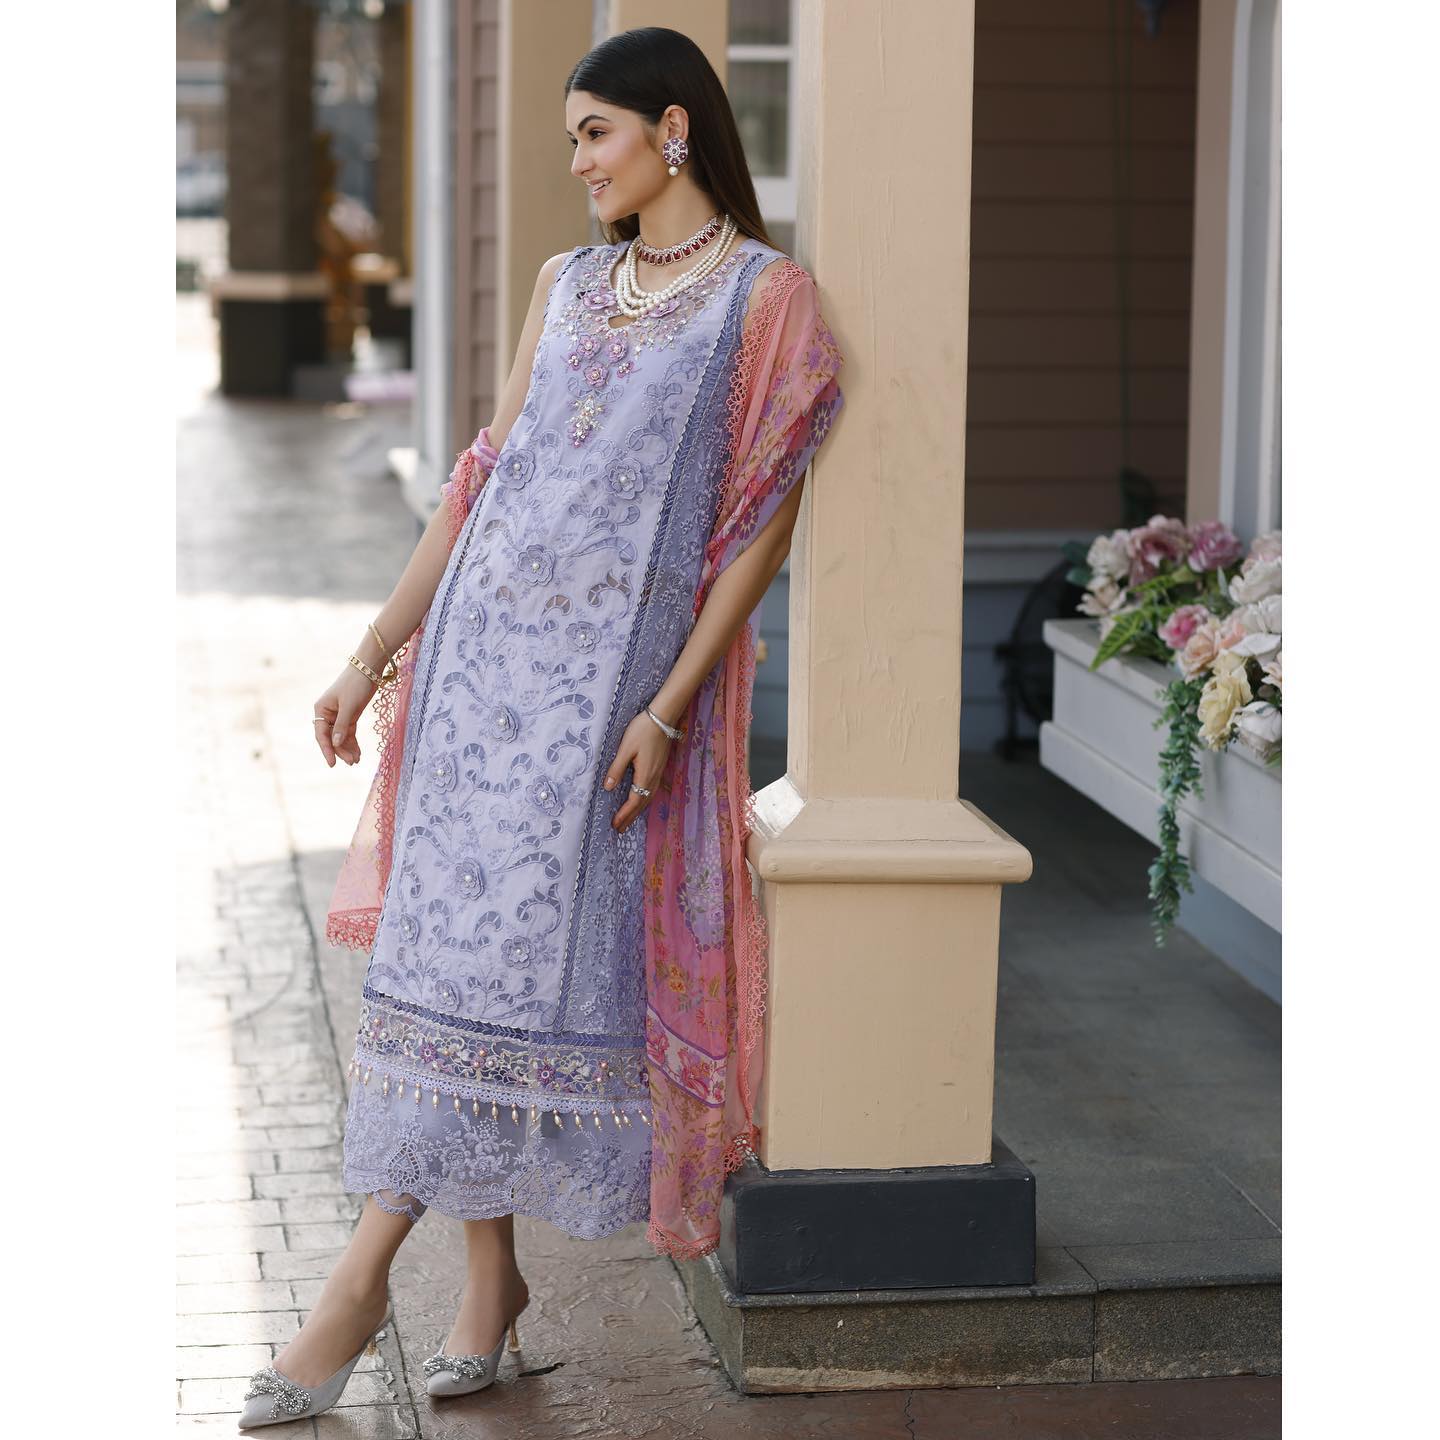 Buy Now, IRIS - Noor Schiffili Lserkari 2023 - Saadia Asad - Shahana Collection UK - Bridal and Party wear dresses